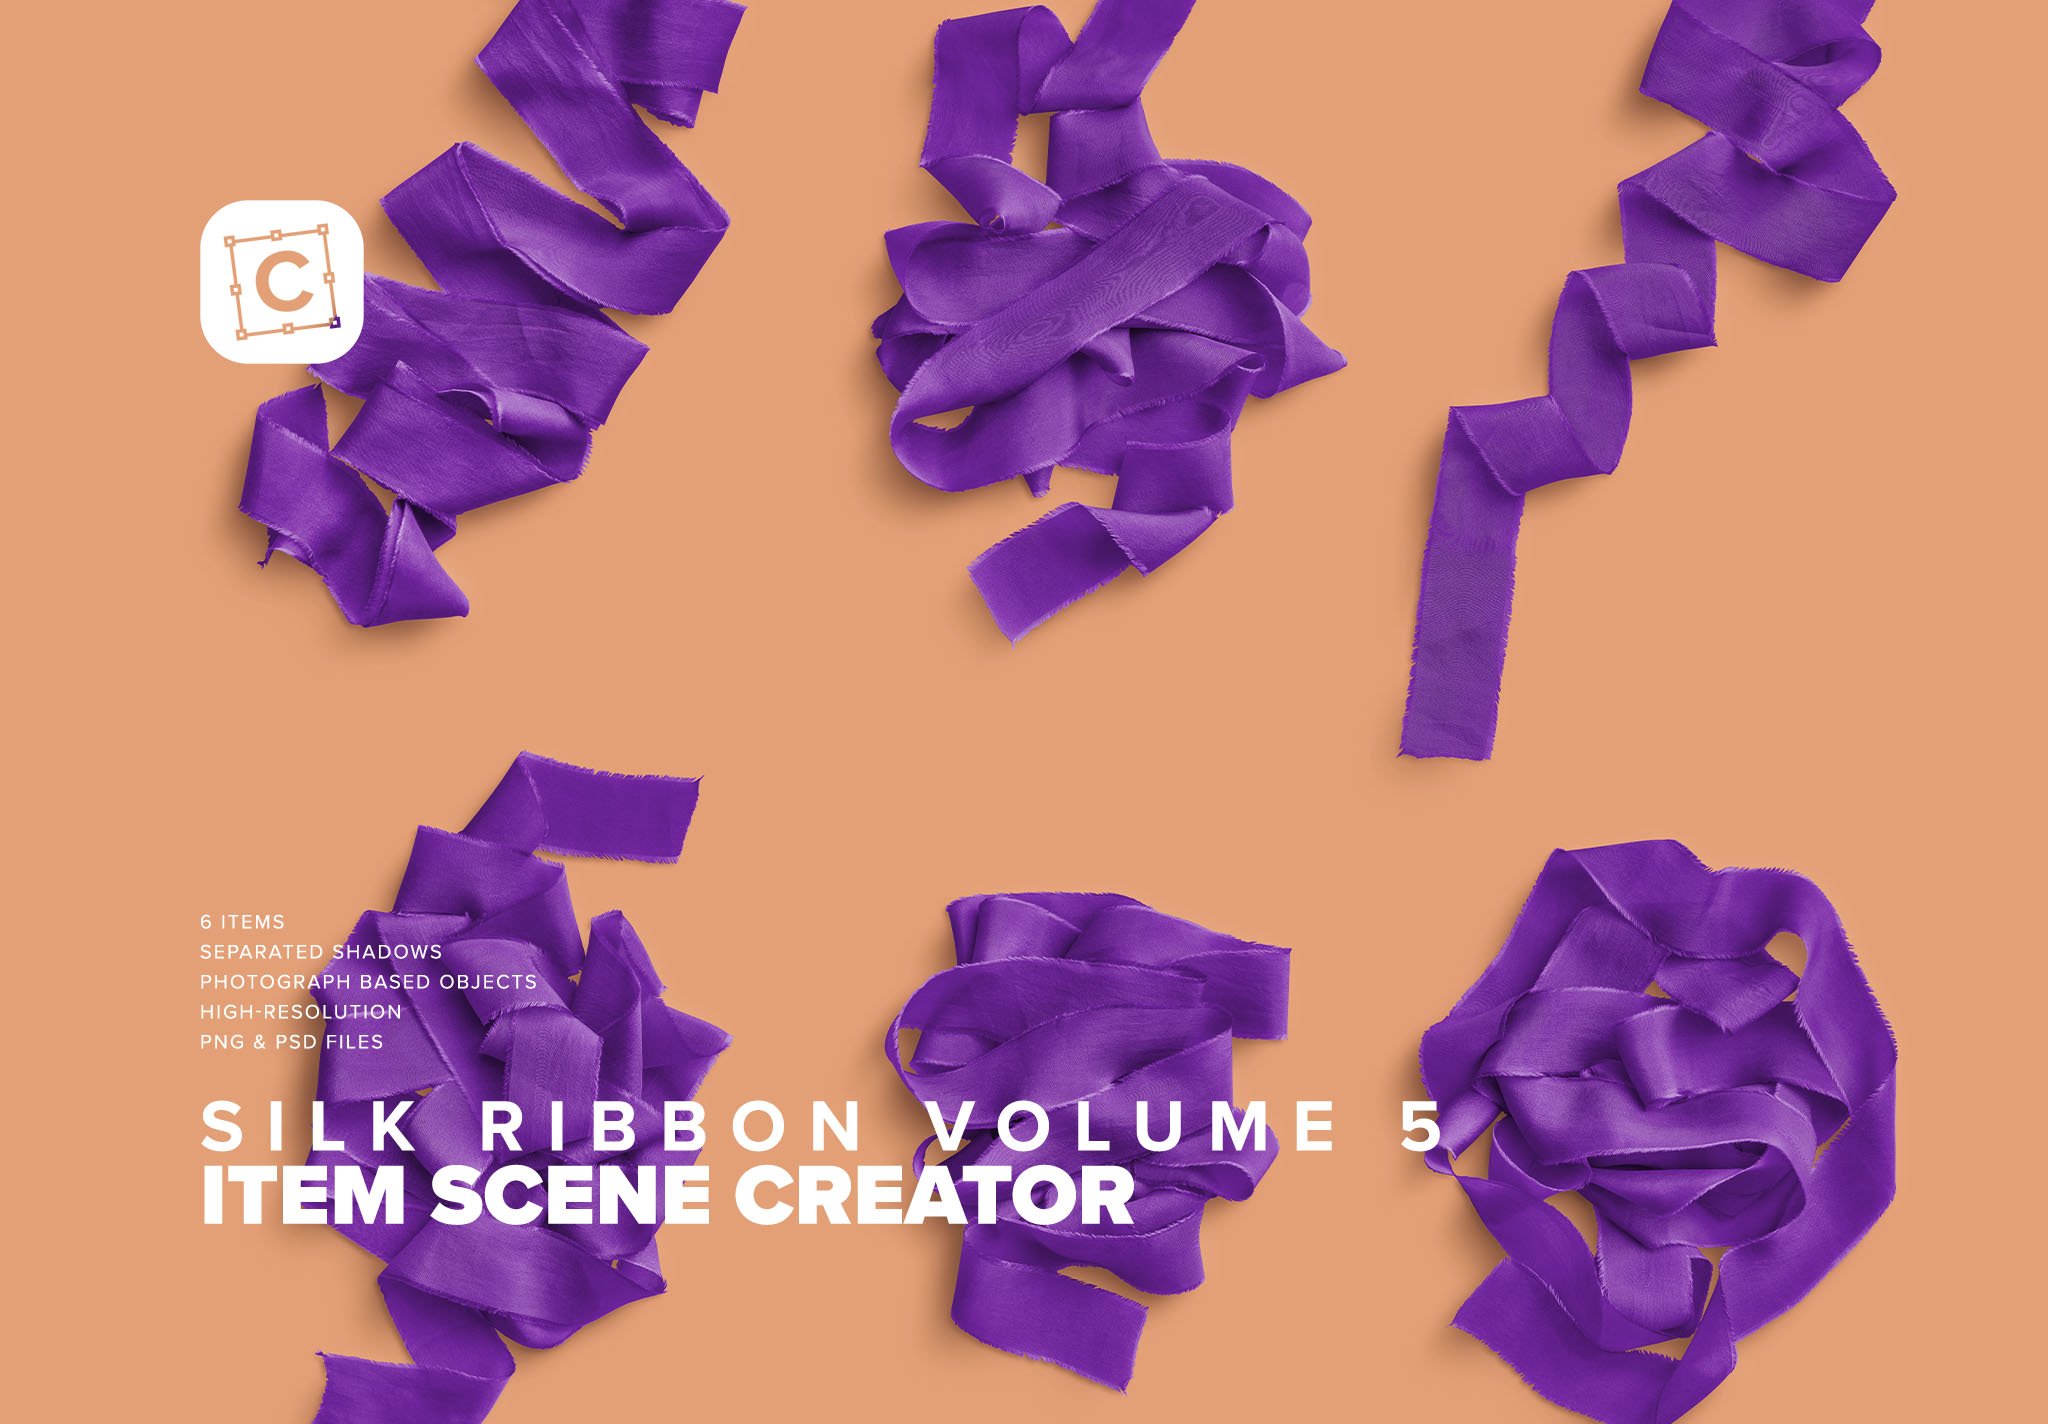 Silk Ribbons Scene Creator vol.5 cover image.